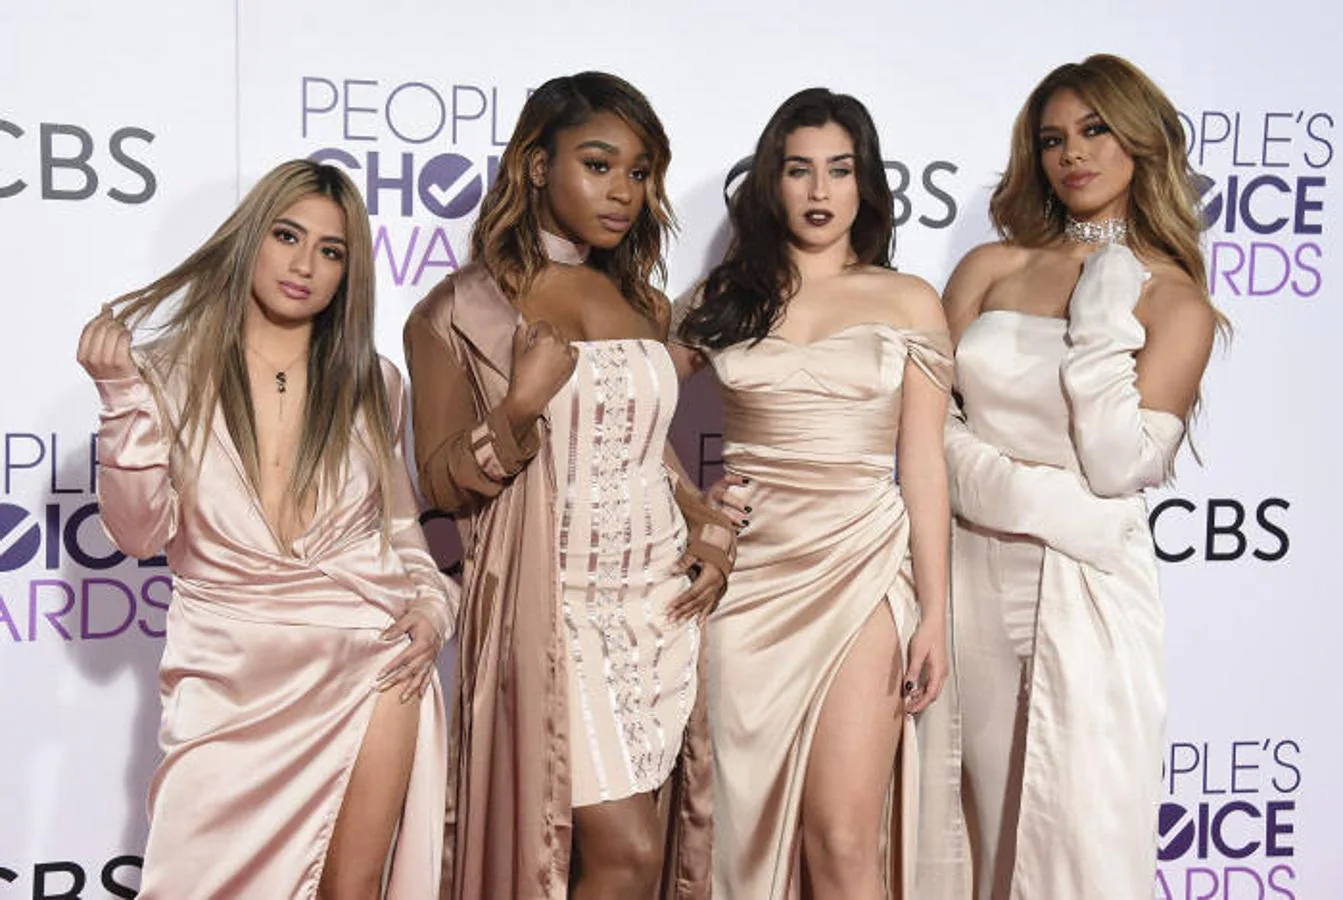 Componentes del grupo musical Fifth Harmony: Ally Brooke, Normani Kordei, Lauren Jauregui y Dinah Jane (de izquierda a derecha)